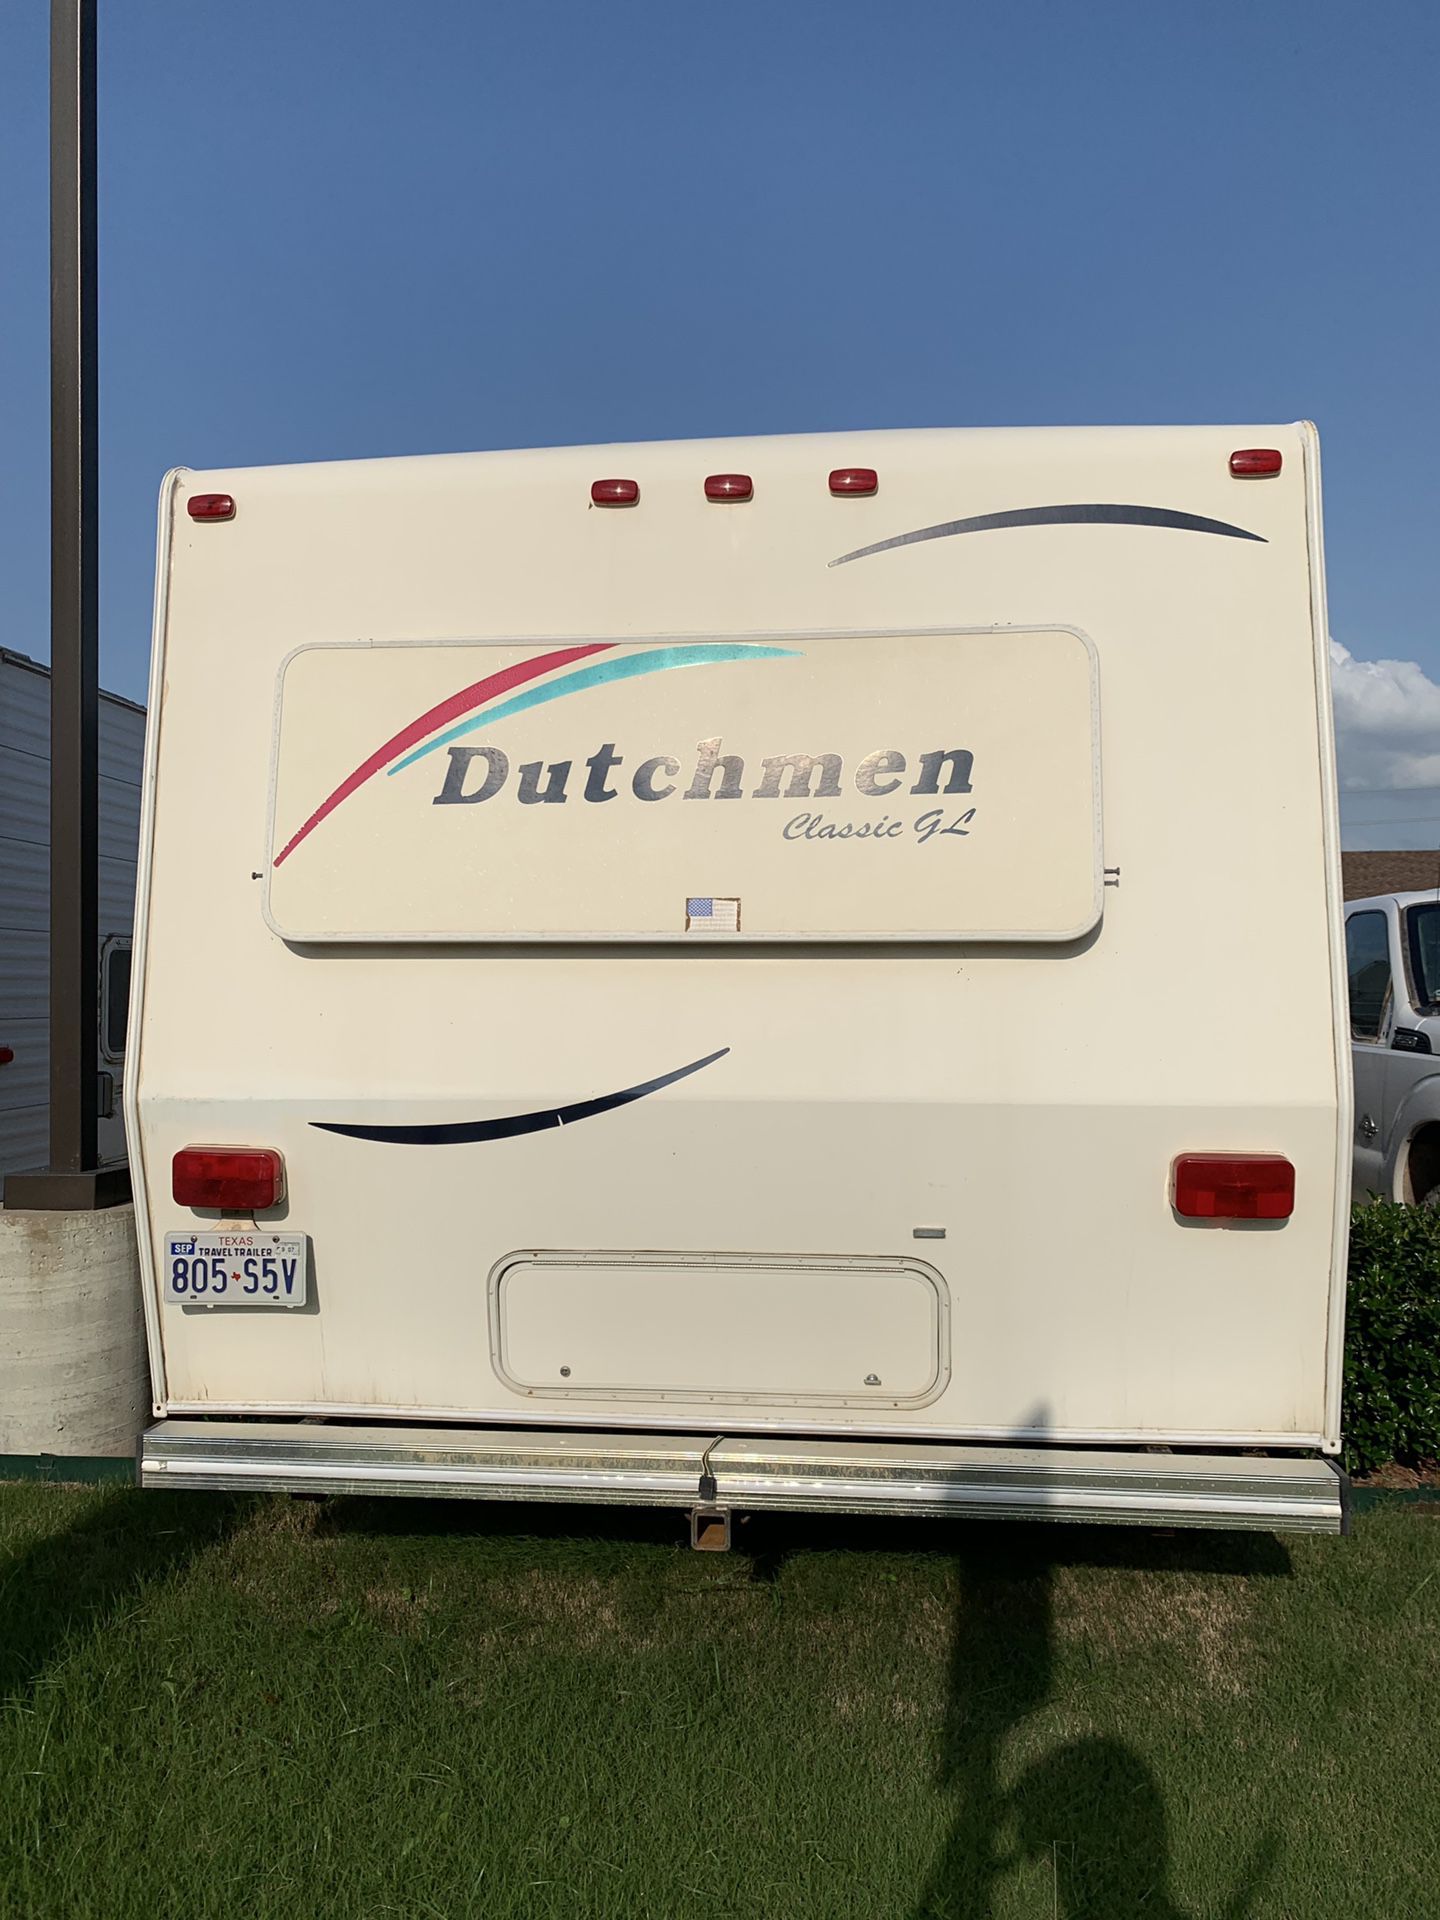 1997 Dutchmen Classic FL for Sale in Arlington, TX - OfferUp